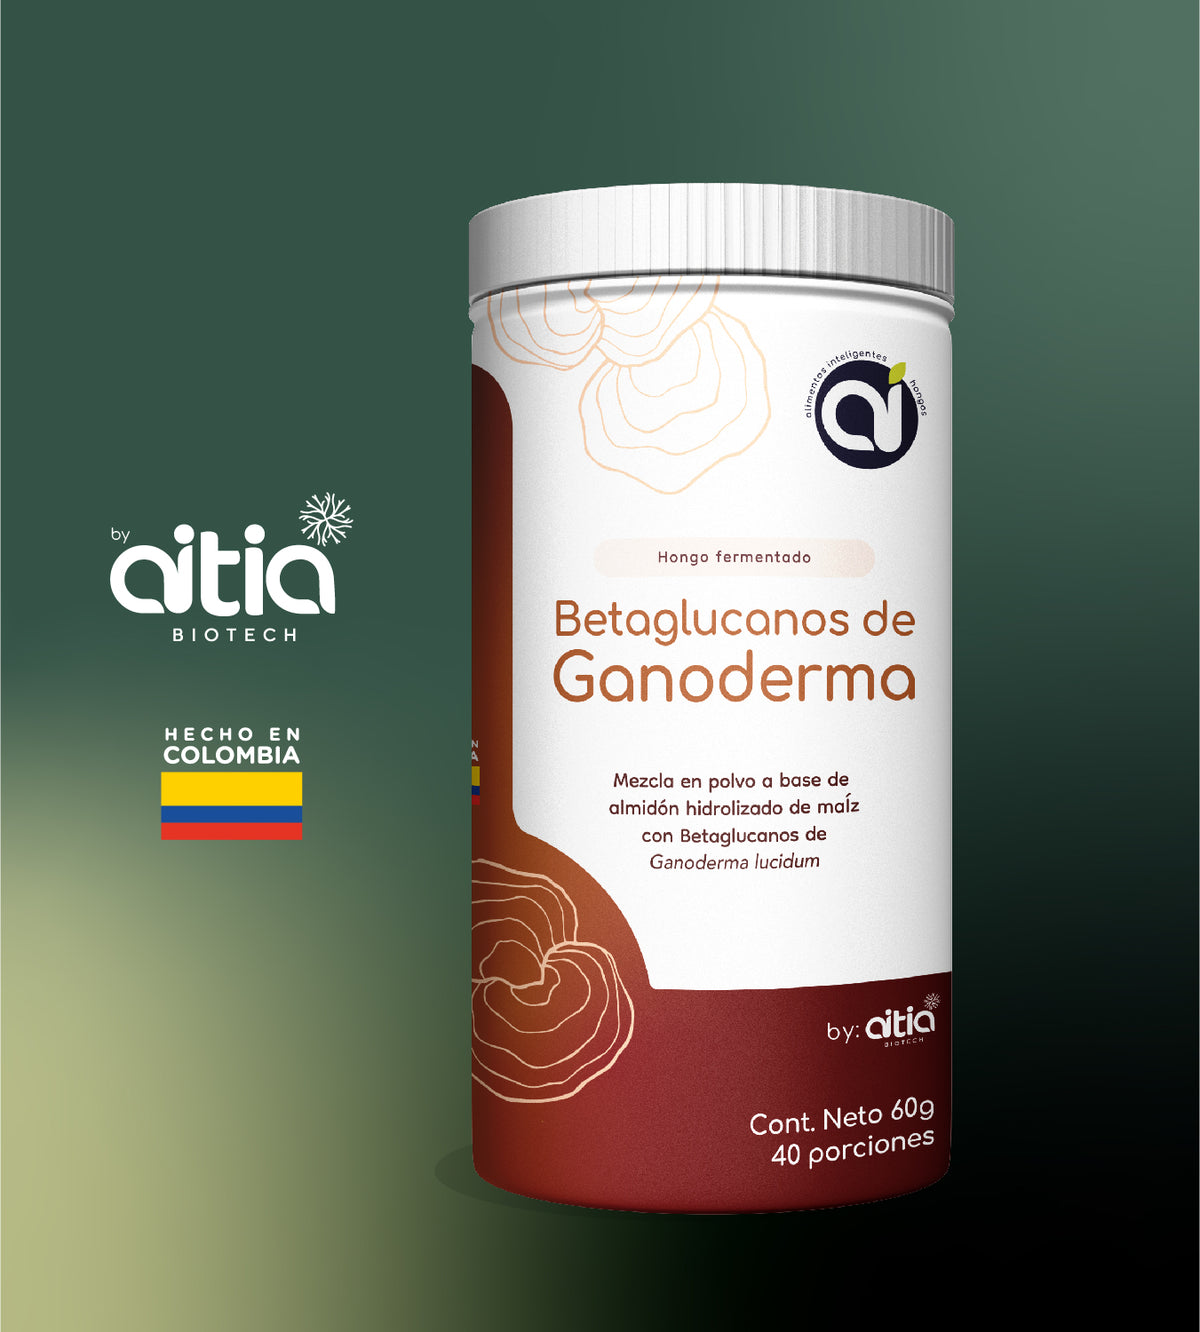 Reishi (Ganoderma lucidum) 100% Hecho en Colombia 🇨🇴